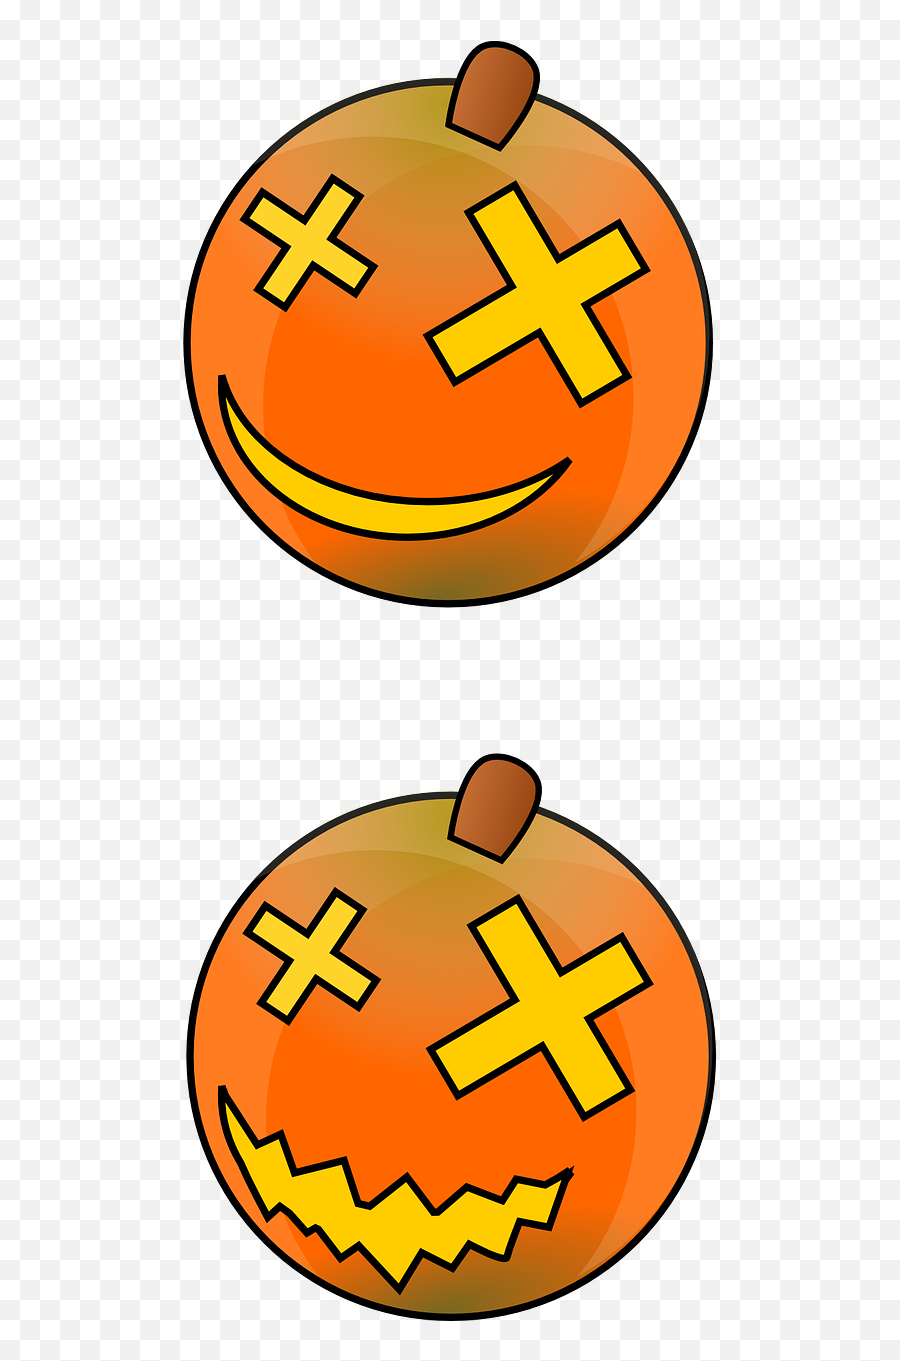 Pumpkin Face Happy - Free Vector Graphic On Pixabay Pumpkin Png,Pumpkin Face Png